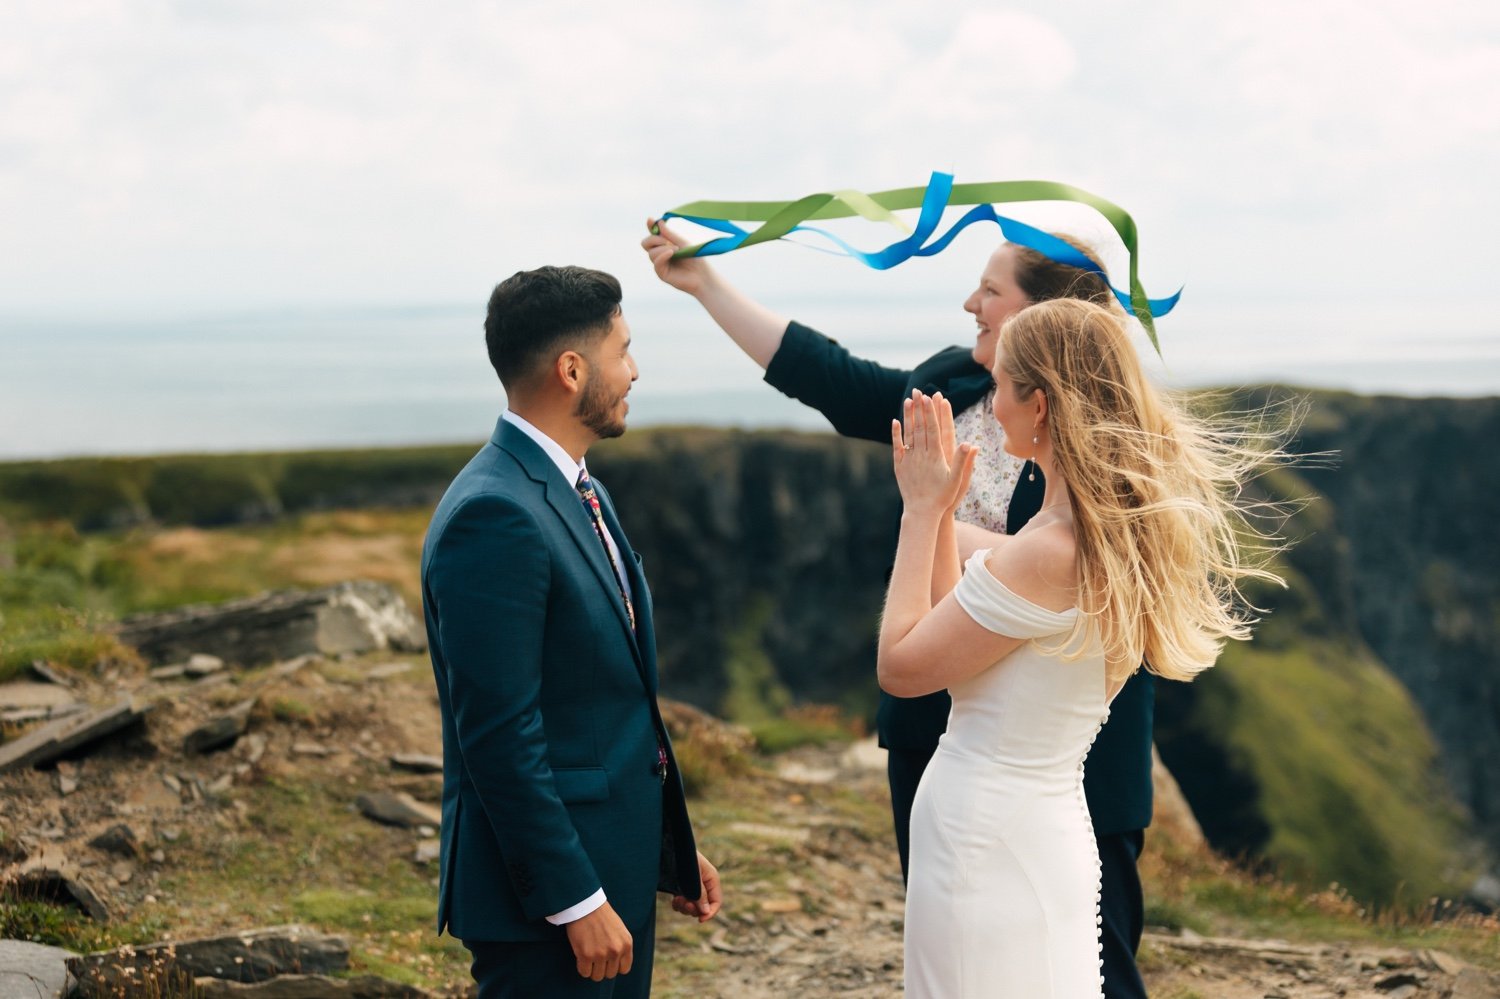 41_Ireland-cliff-elopement-wedding-photographer-kmp-photography-2217.jpg